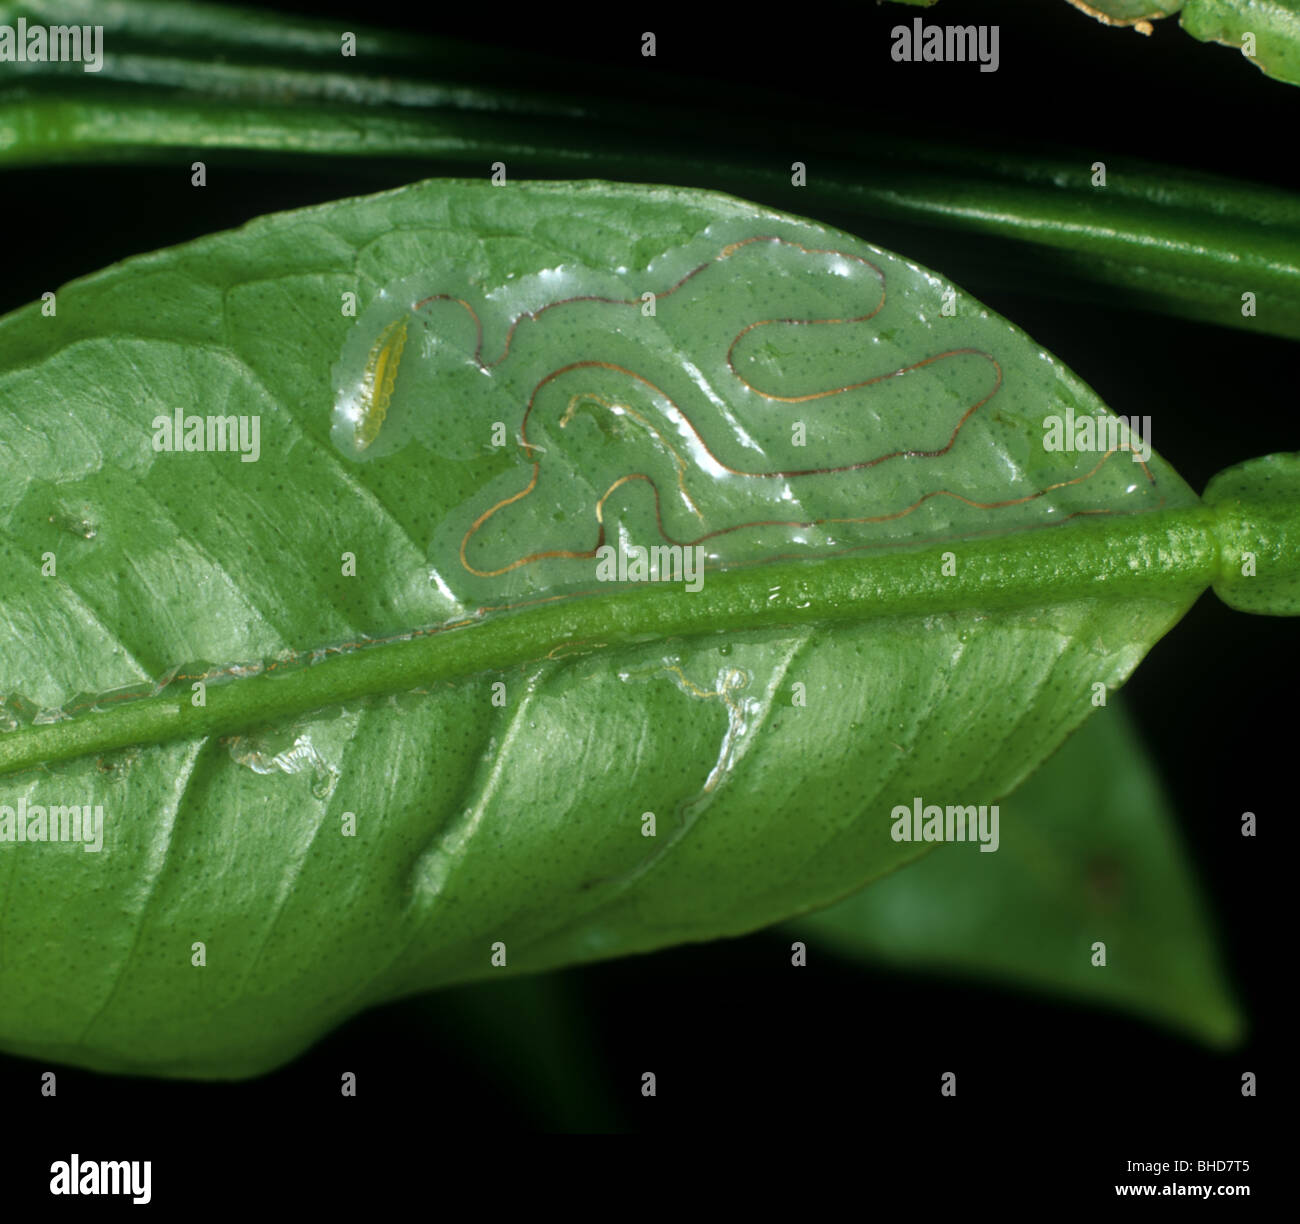 Zitrusleafminer (Phyllocnistis citrella) Larve in Blattmine in Zitronenblatt Stockfoto